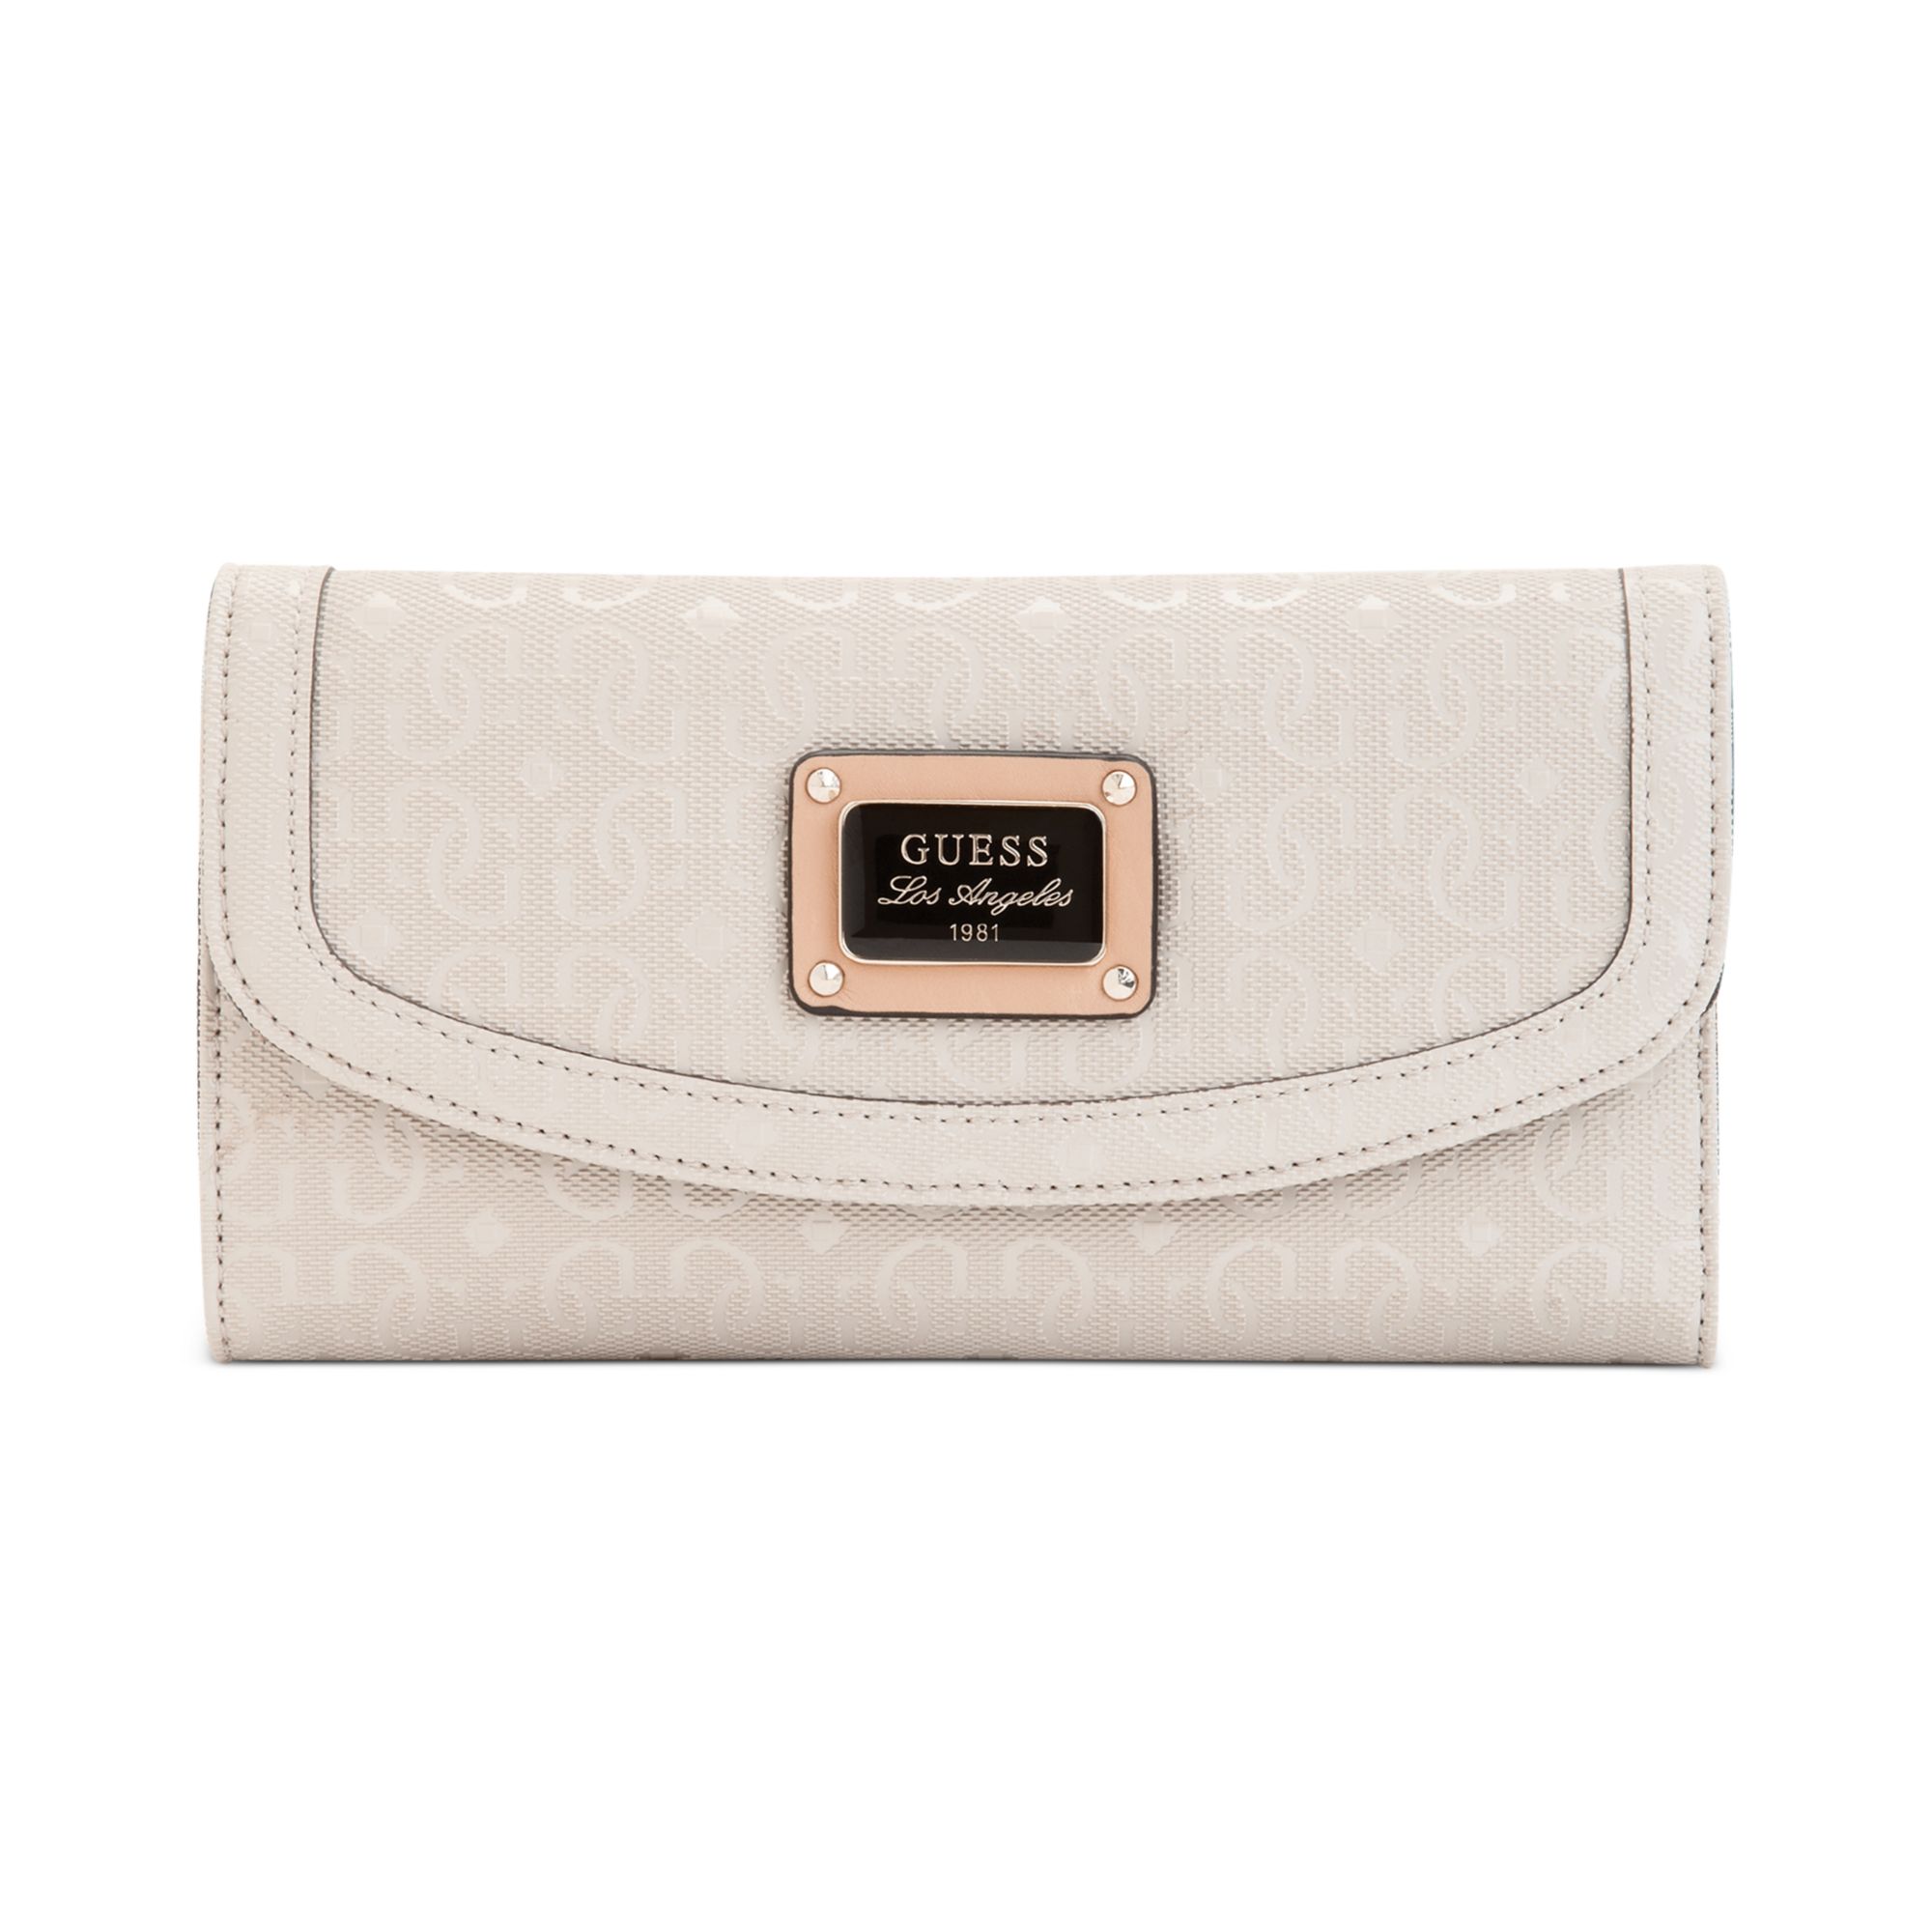 Guess Handbag Specks Multi Clutch Wallet in Natural | Lyst